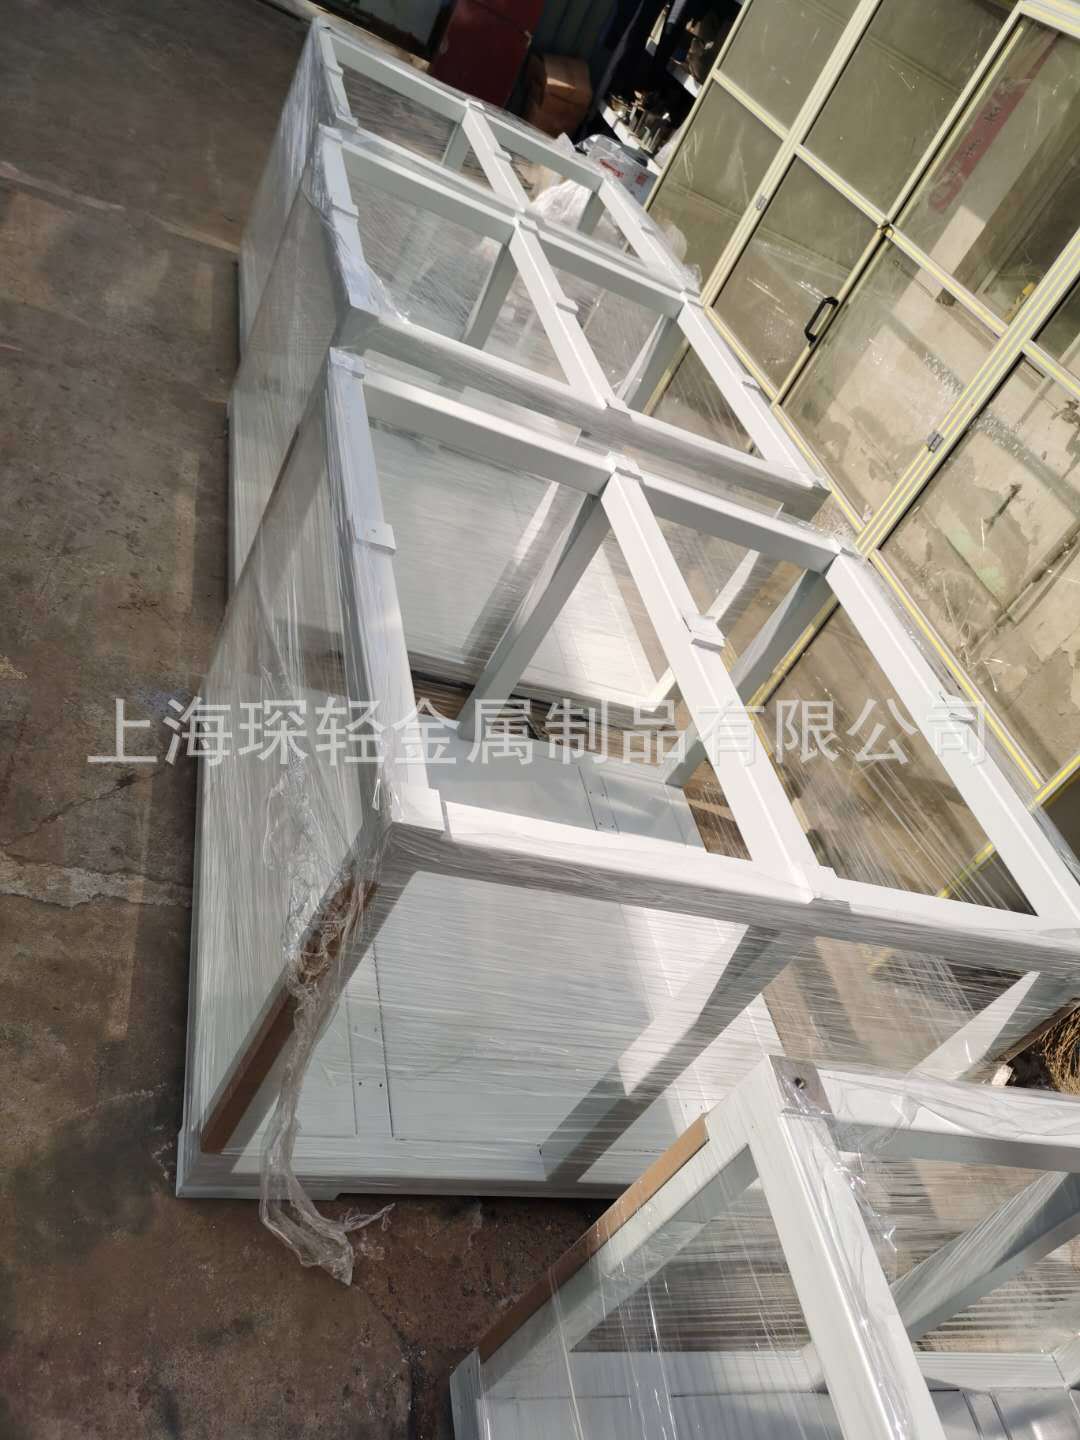 Shanghai Manufactor Foreign Manufactor Metal finished product welding large Frame welding Sheet metal bending machining